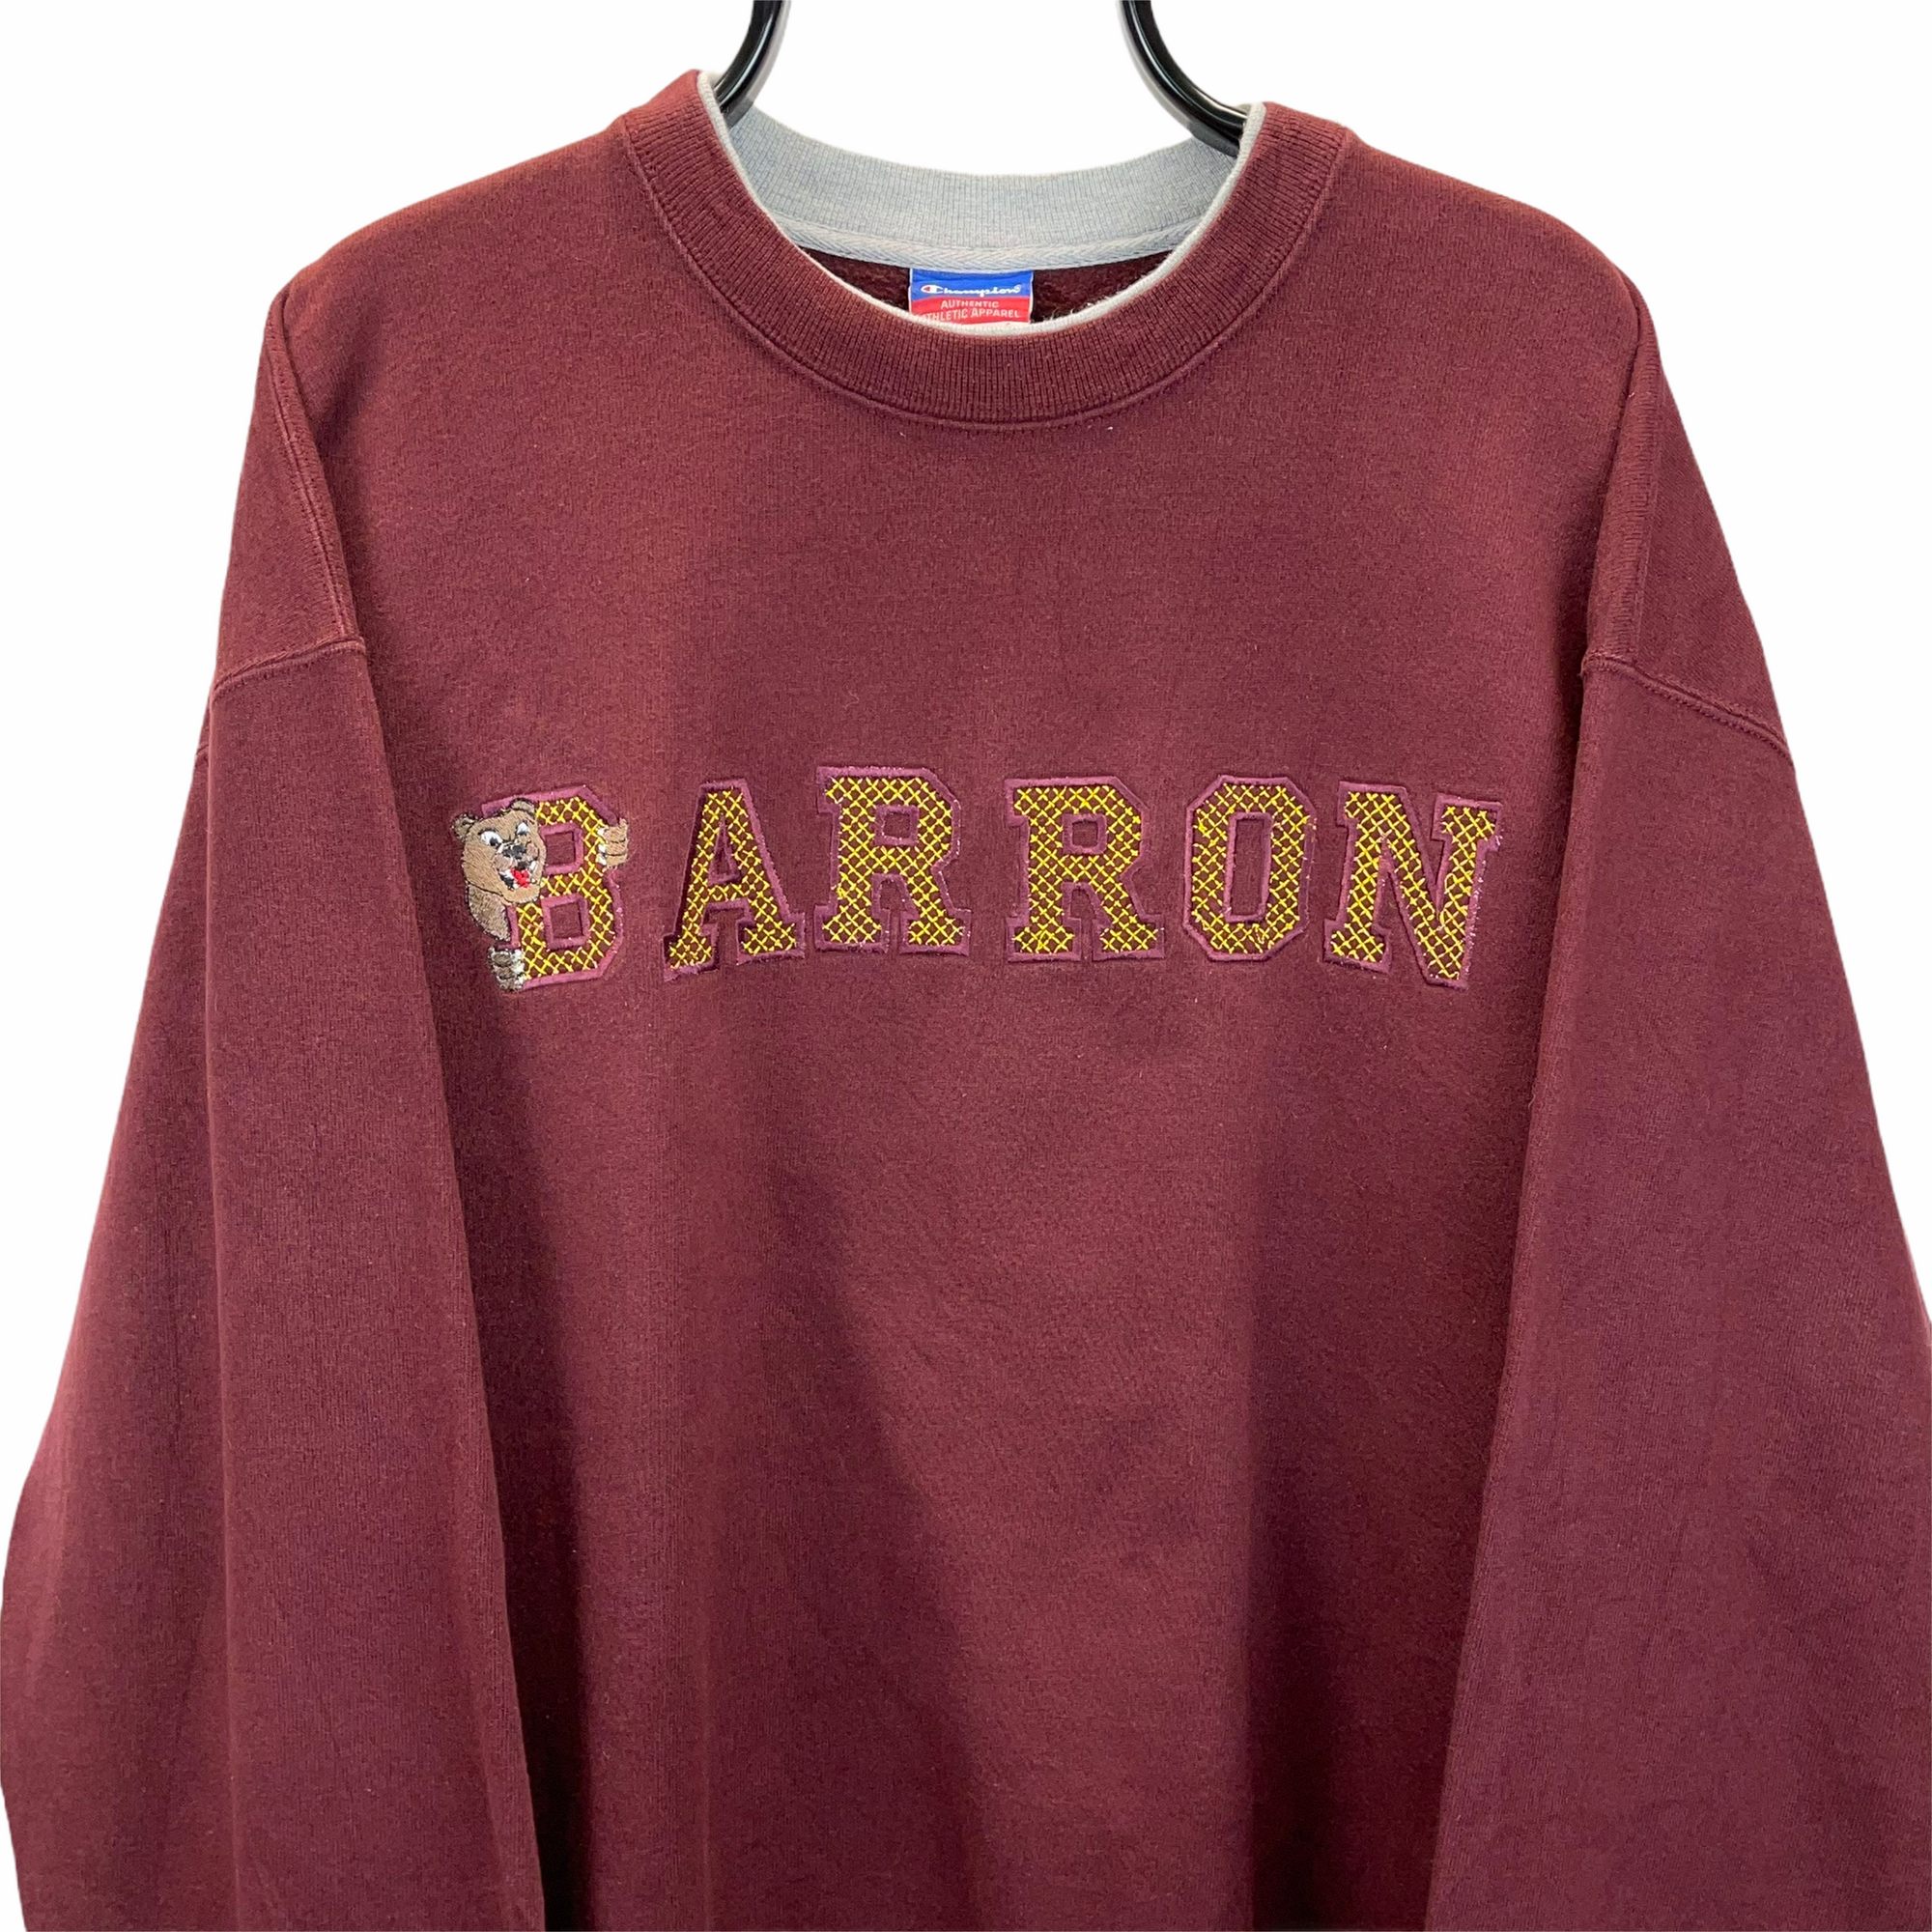 Vintage Champion Barron Golden Bears Sweatshirt in Burgundy - Men's XXL/Women's XXXL